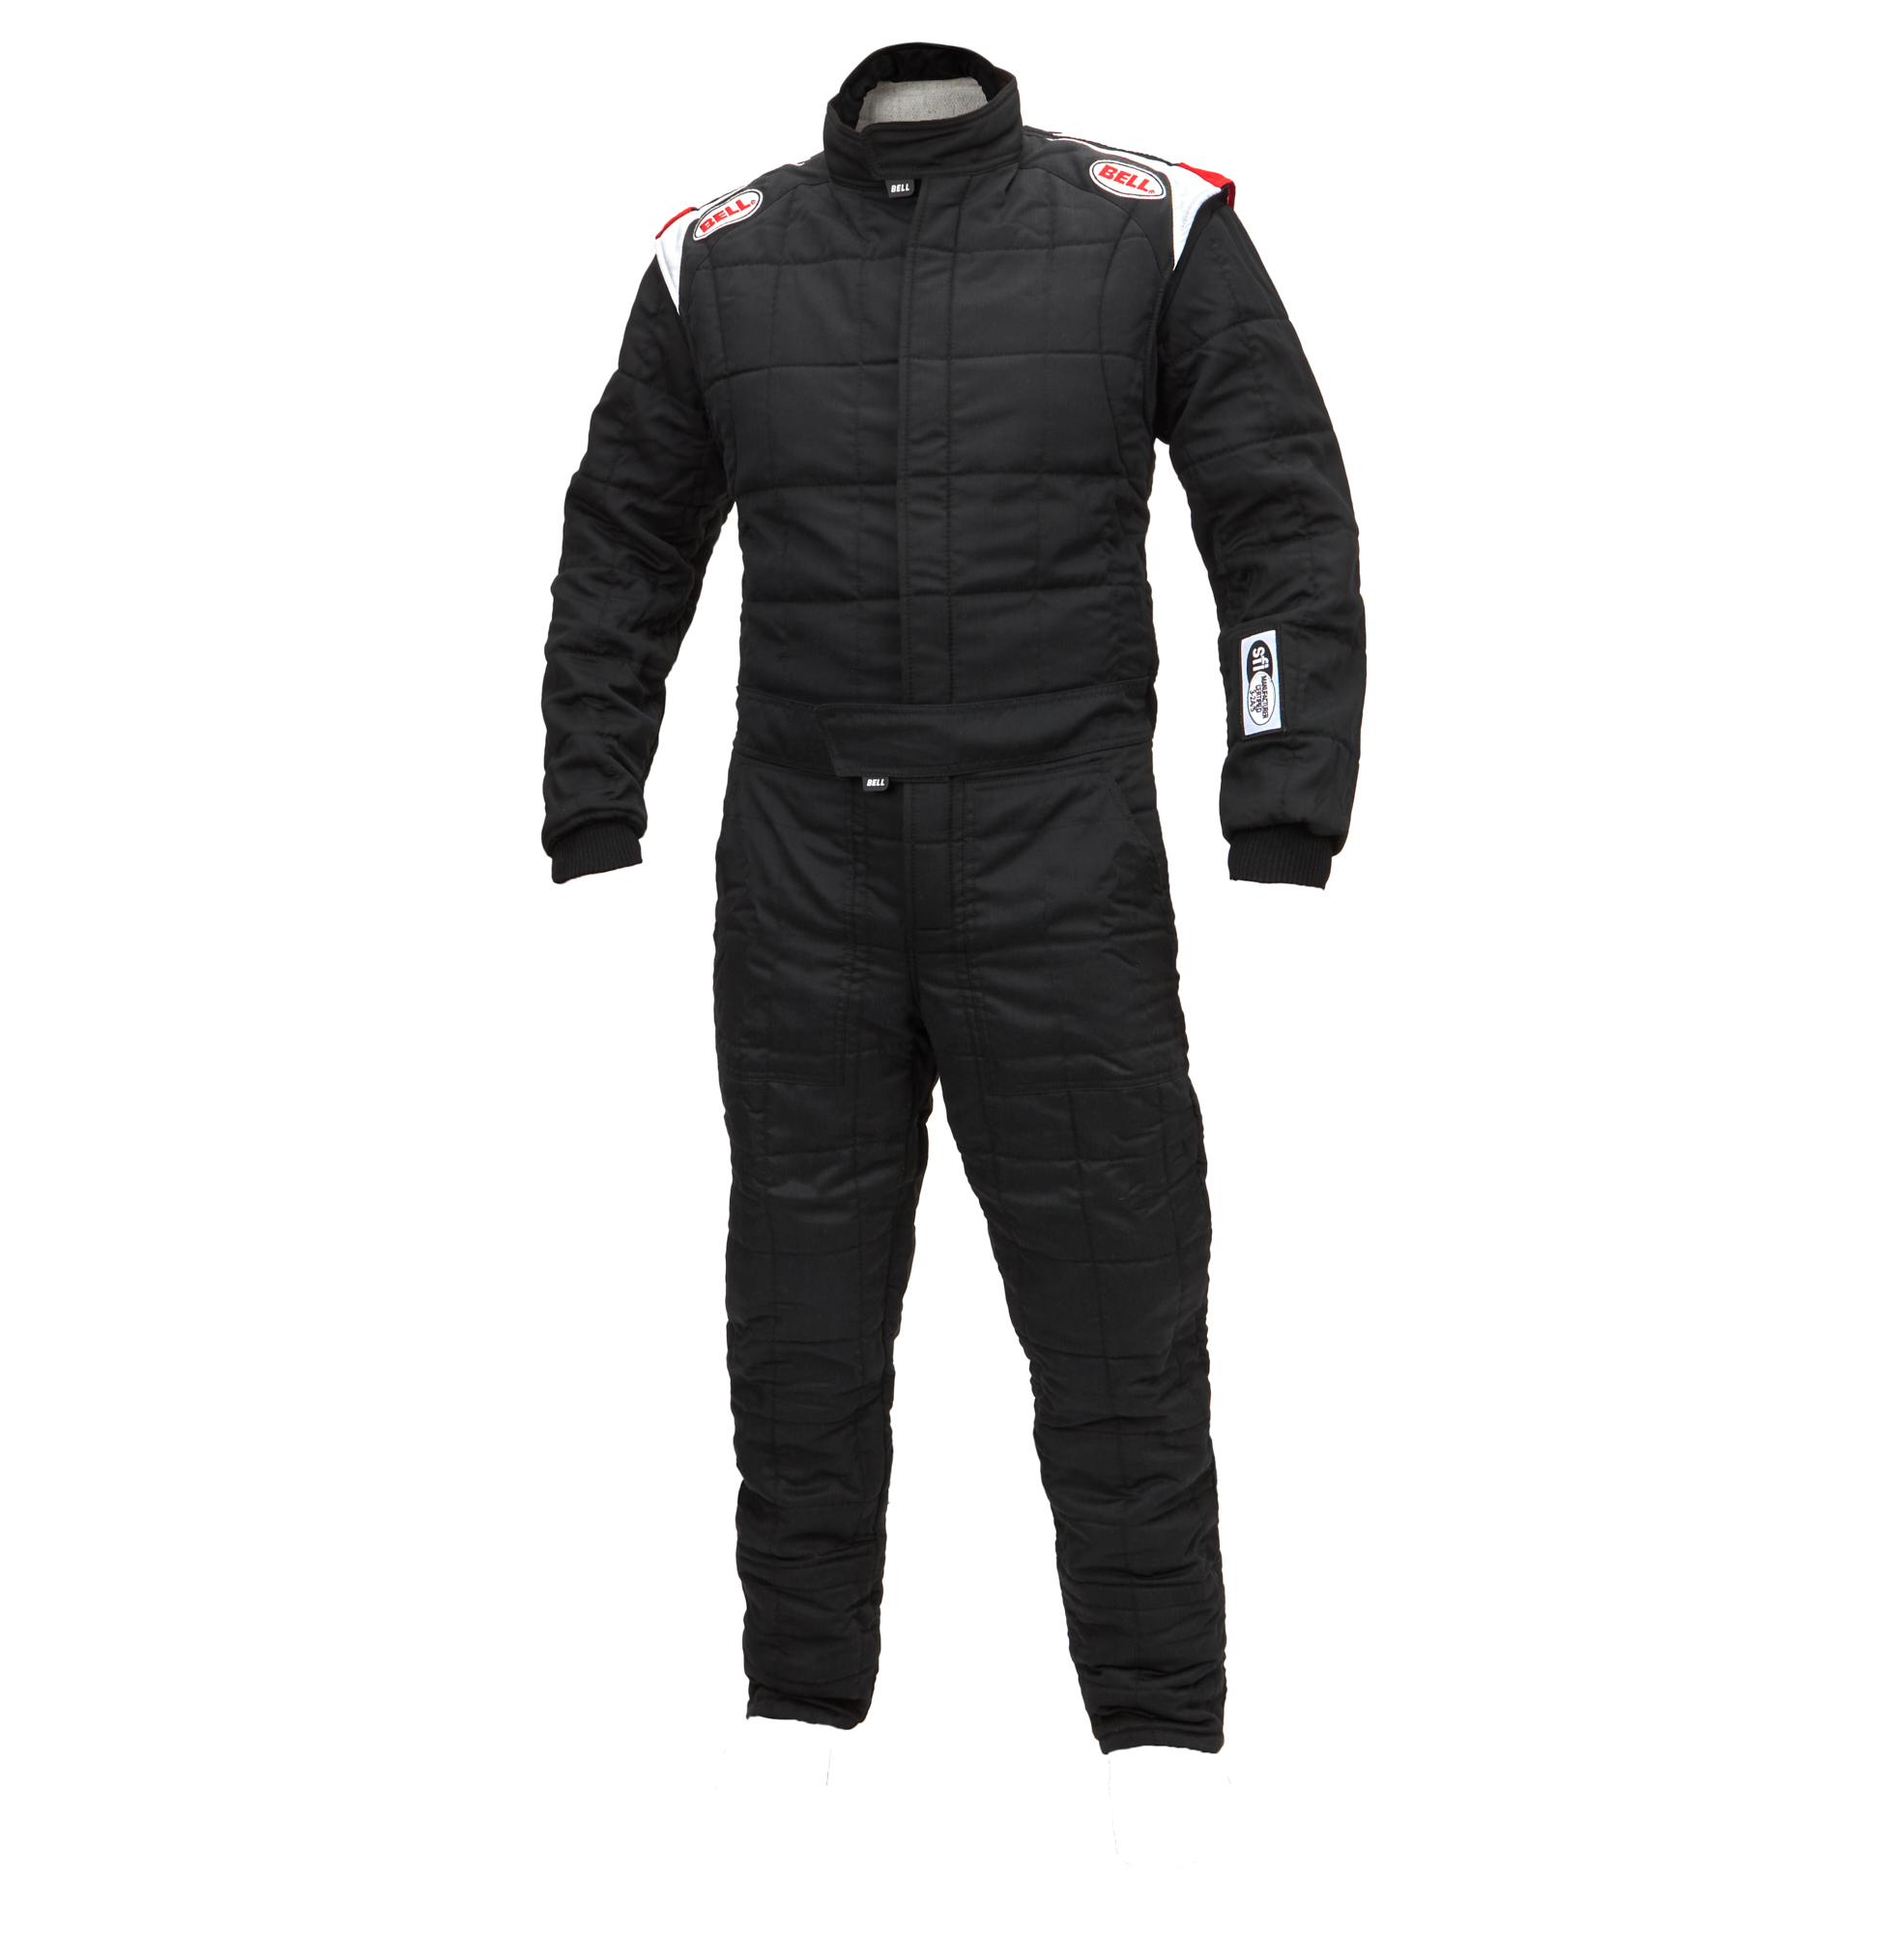 Bell Sport-TX Suit Black Large (54-56) SFI 3.2A/5 - BR10063